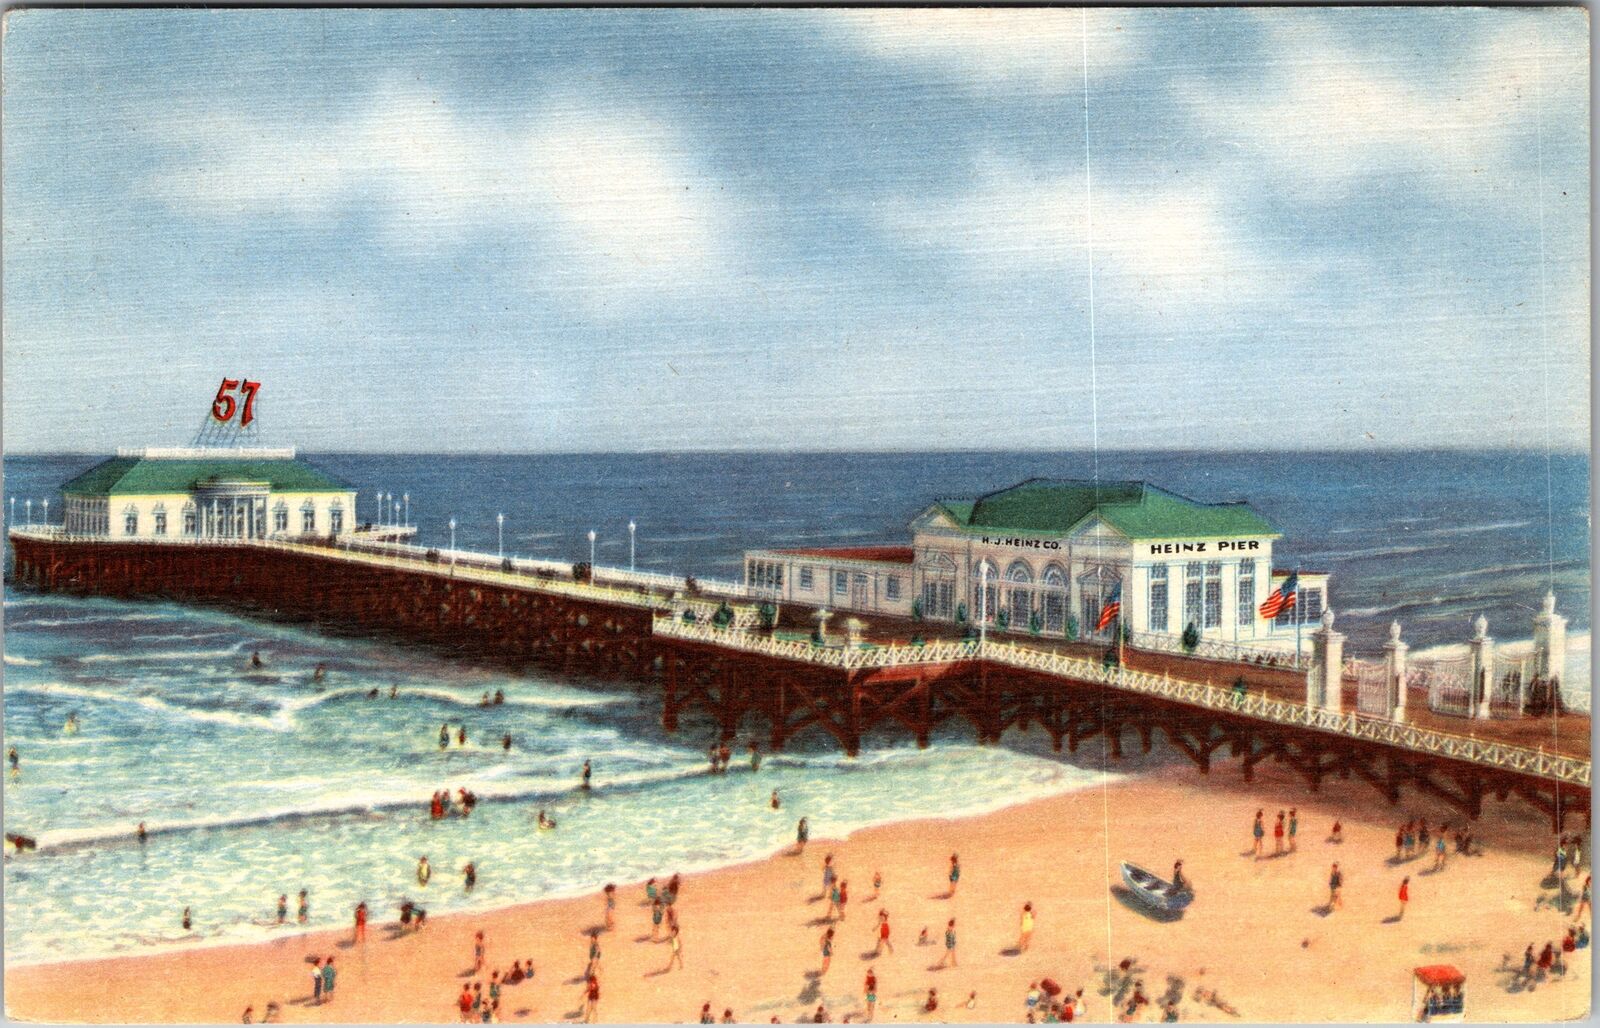 Atlantic City NJ-New Jersey, Heinz Ocean Pier, Beach Vintage Souvenir Postcard